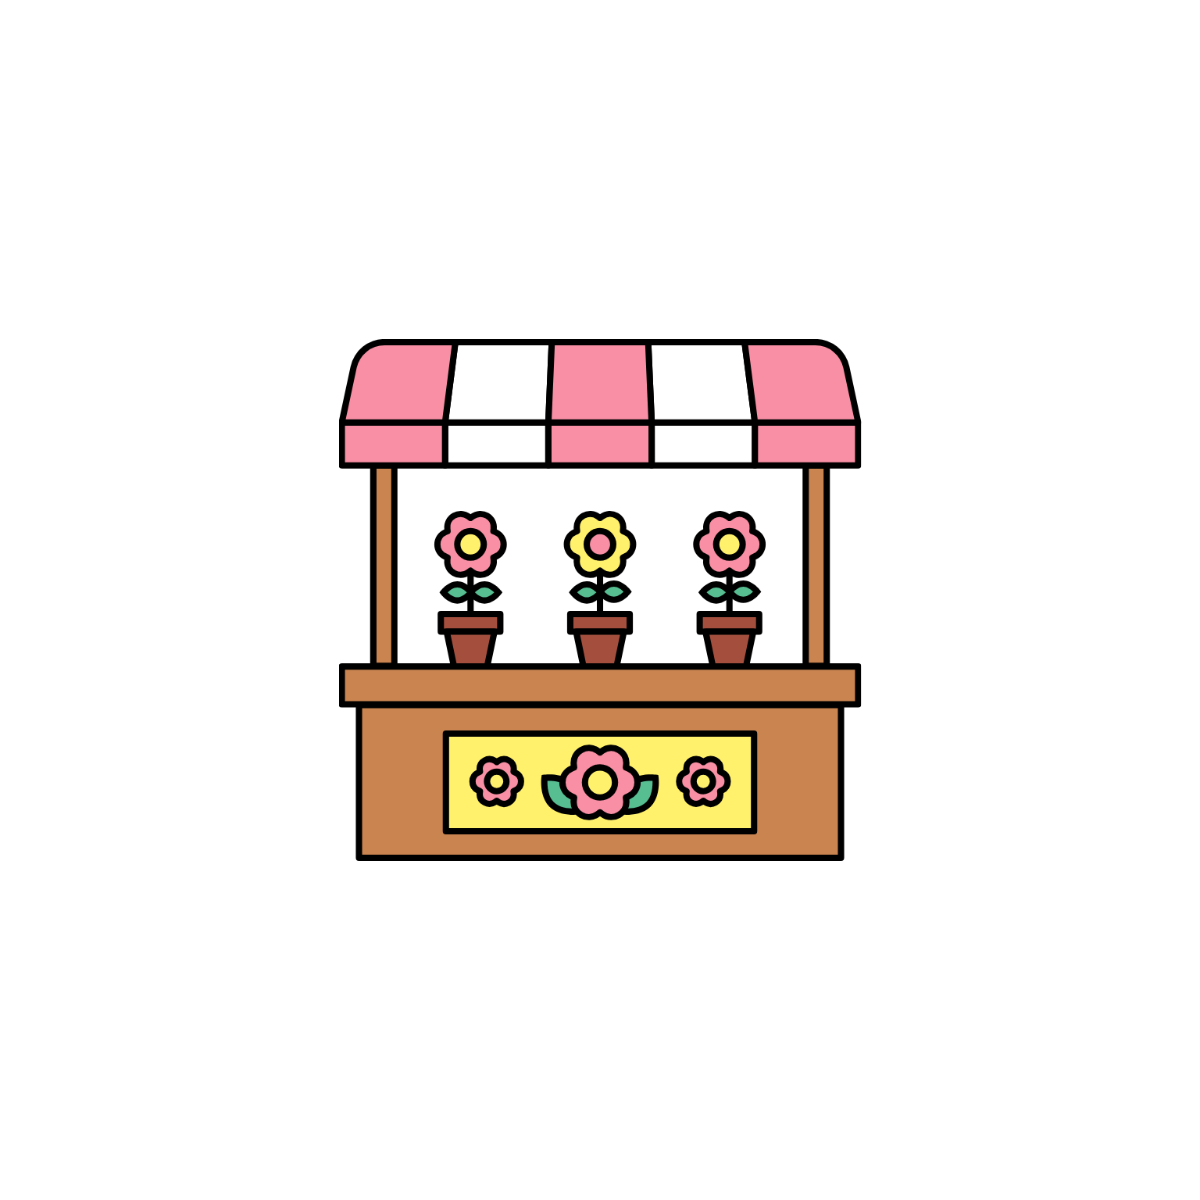 Flower Shop Icon